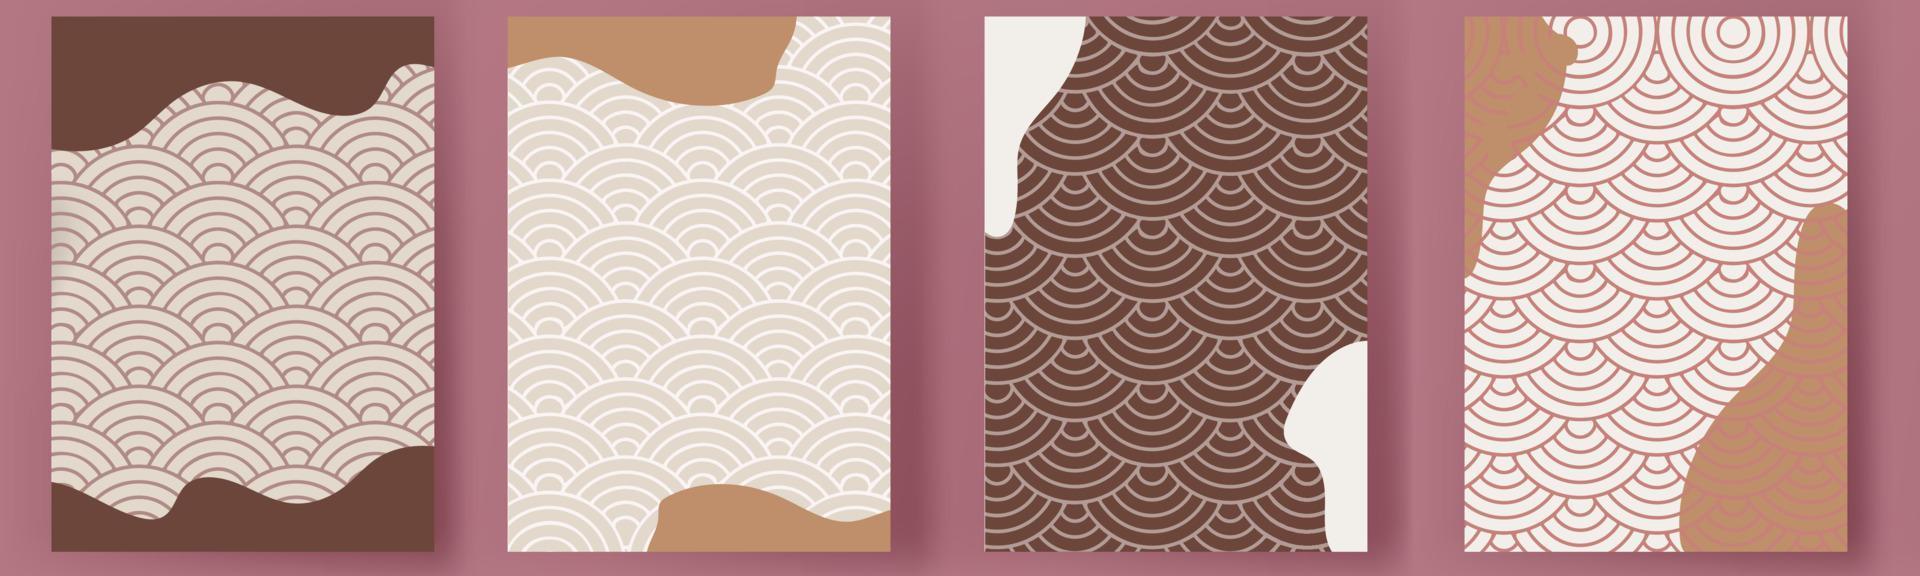 Japanse sjabloon moderne minimal art vector set. geometrische kaart achtergrond set.abstract cover ontwerp banner brochure stijl.